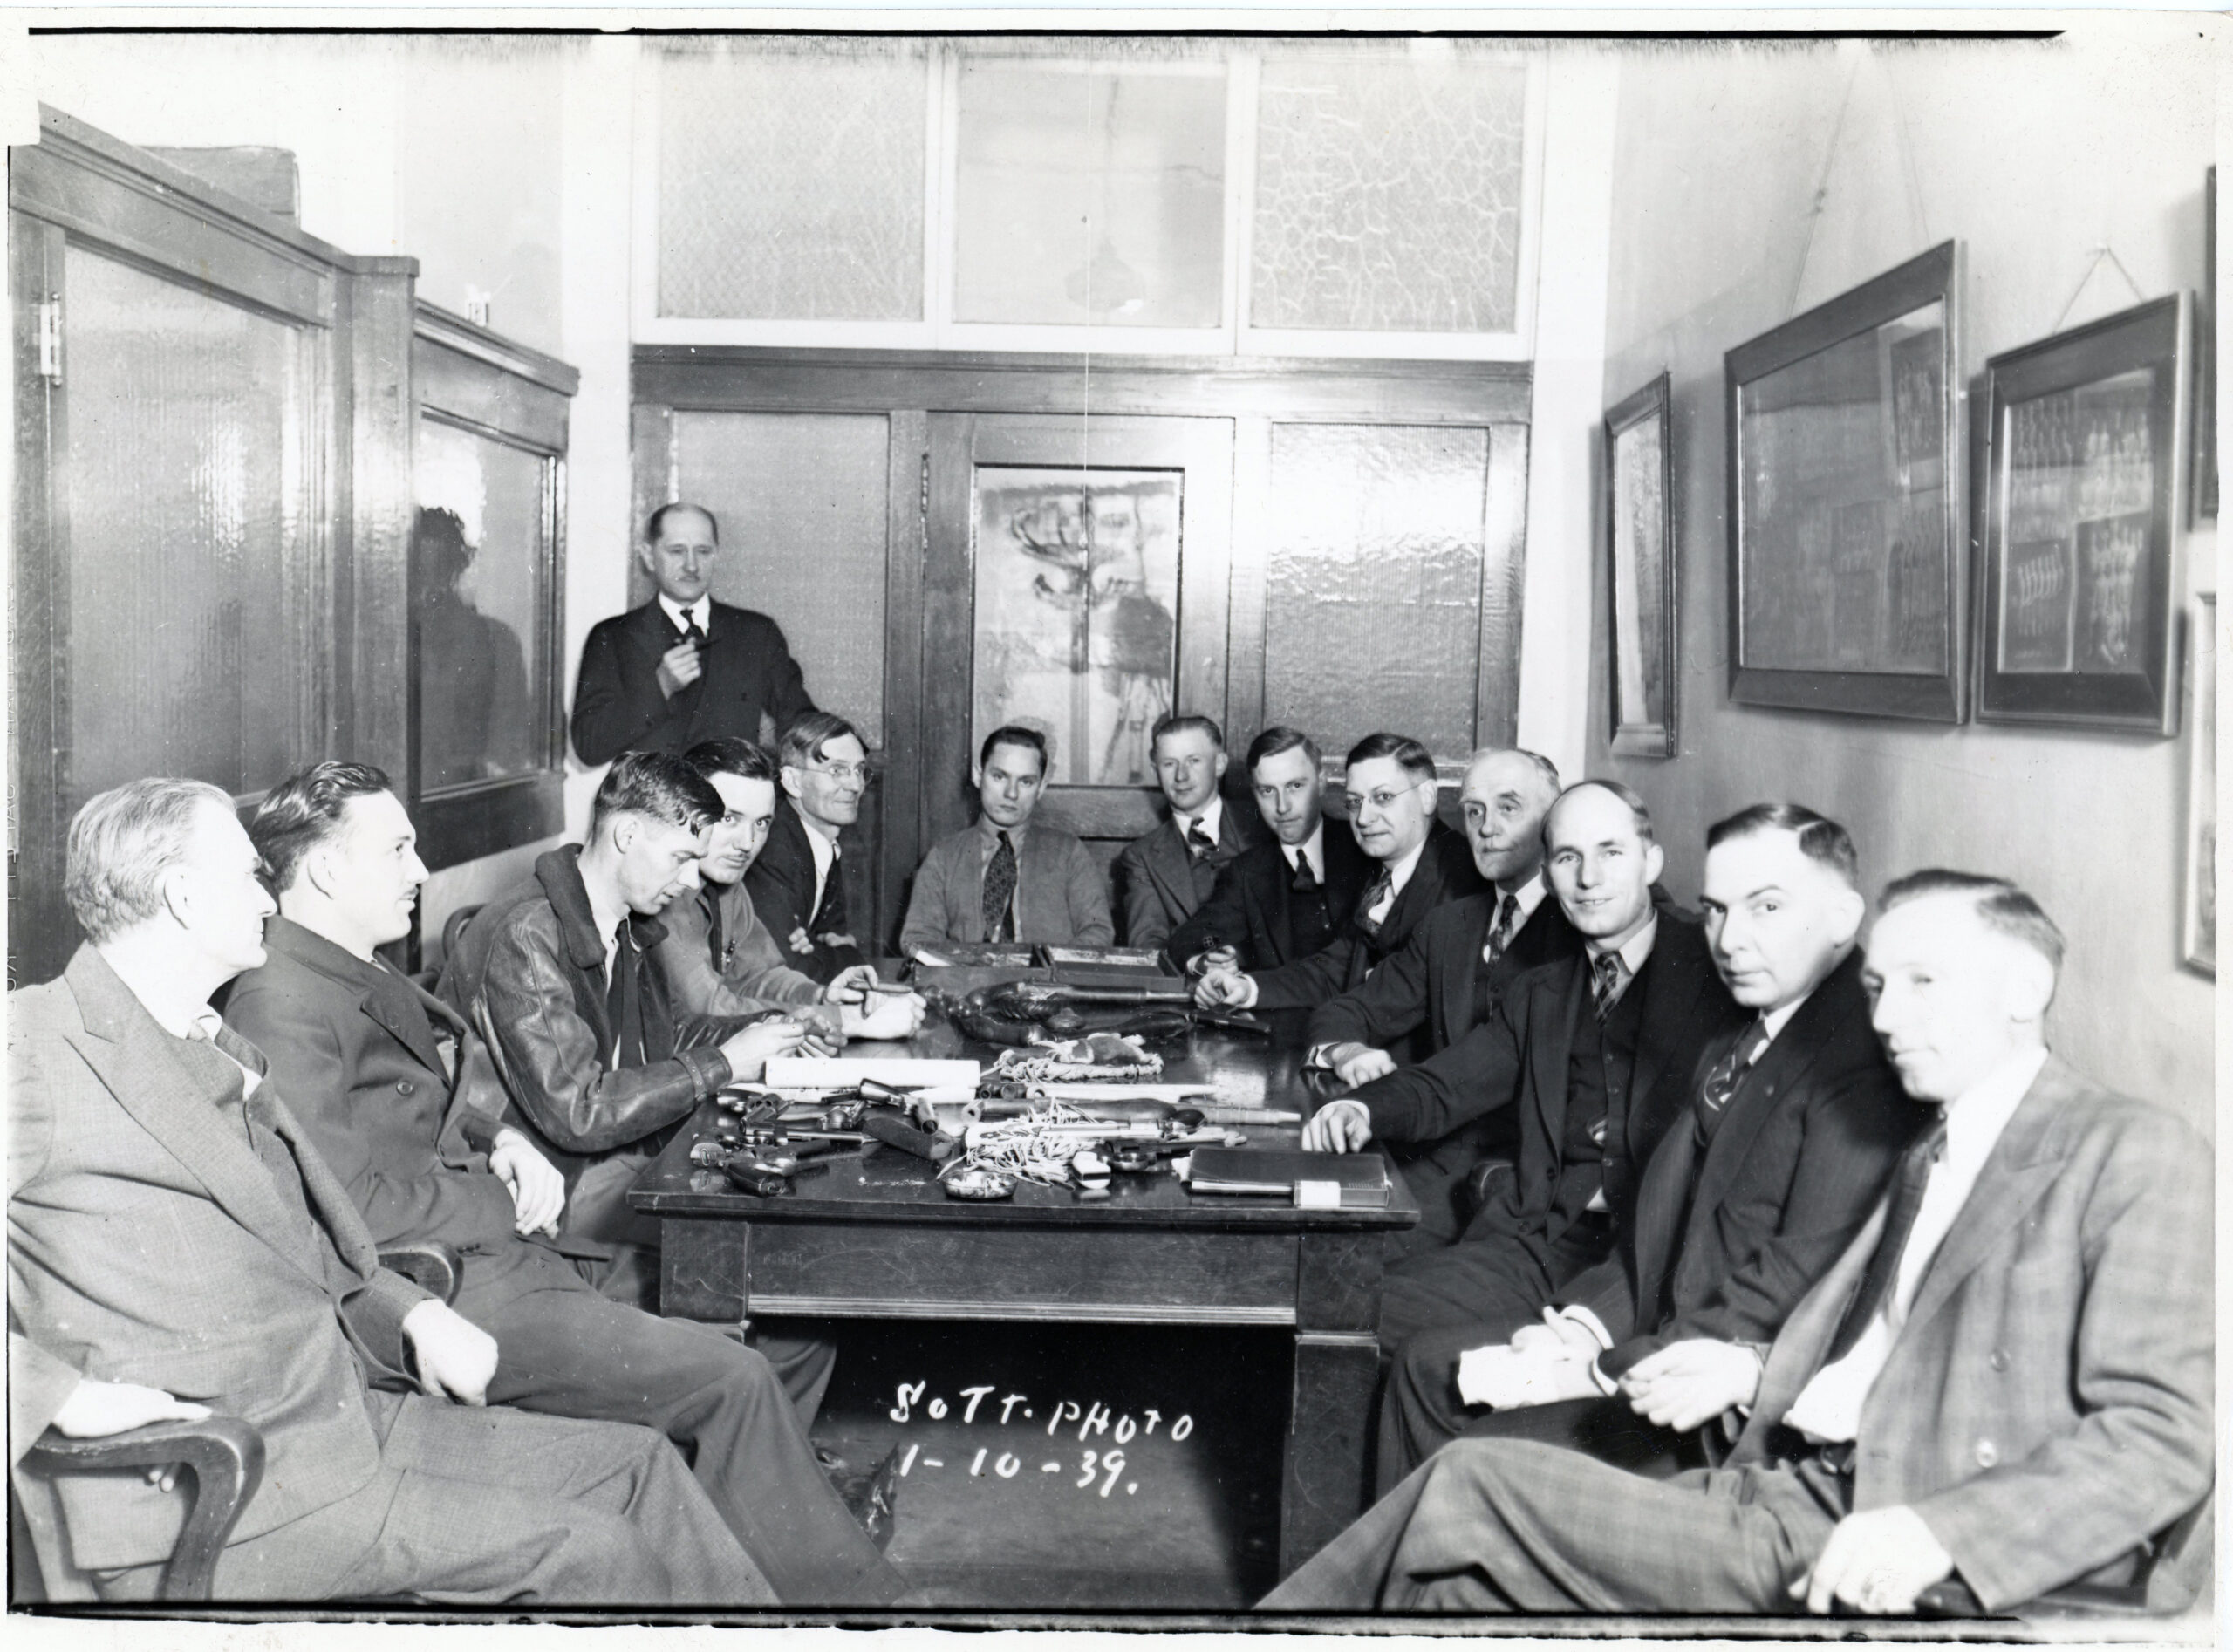 Early meeting of members of OGCA circa 1939